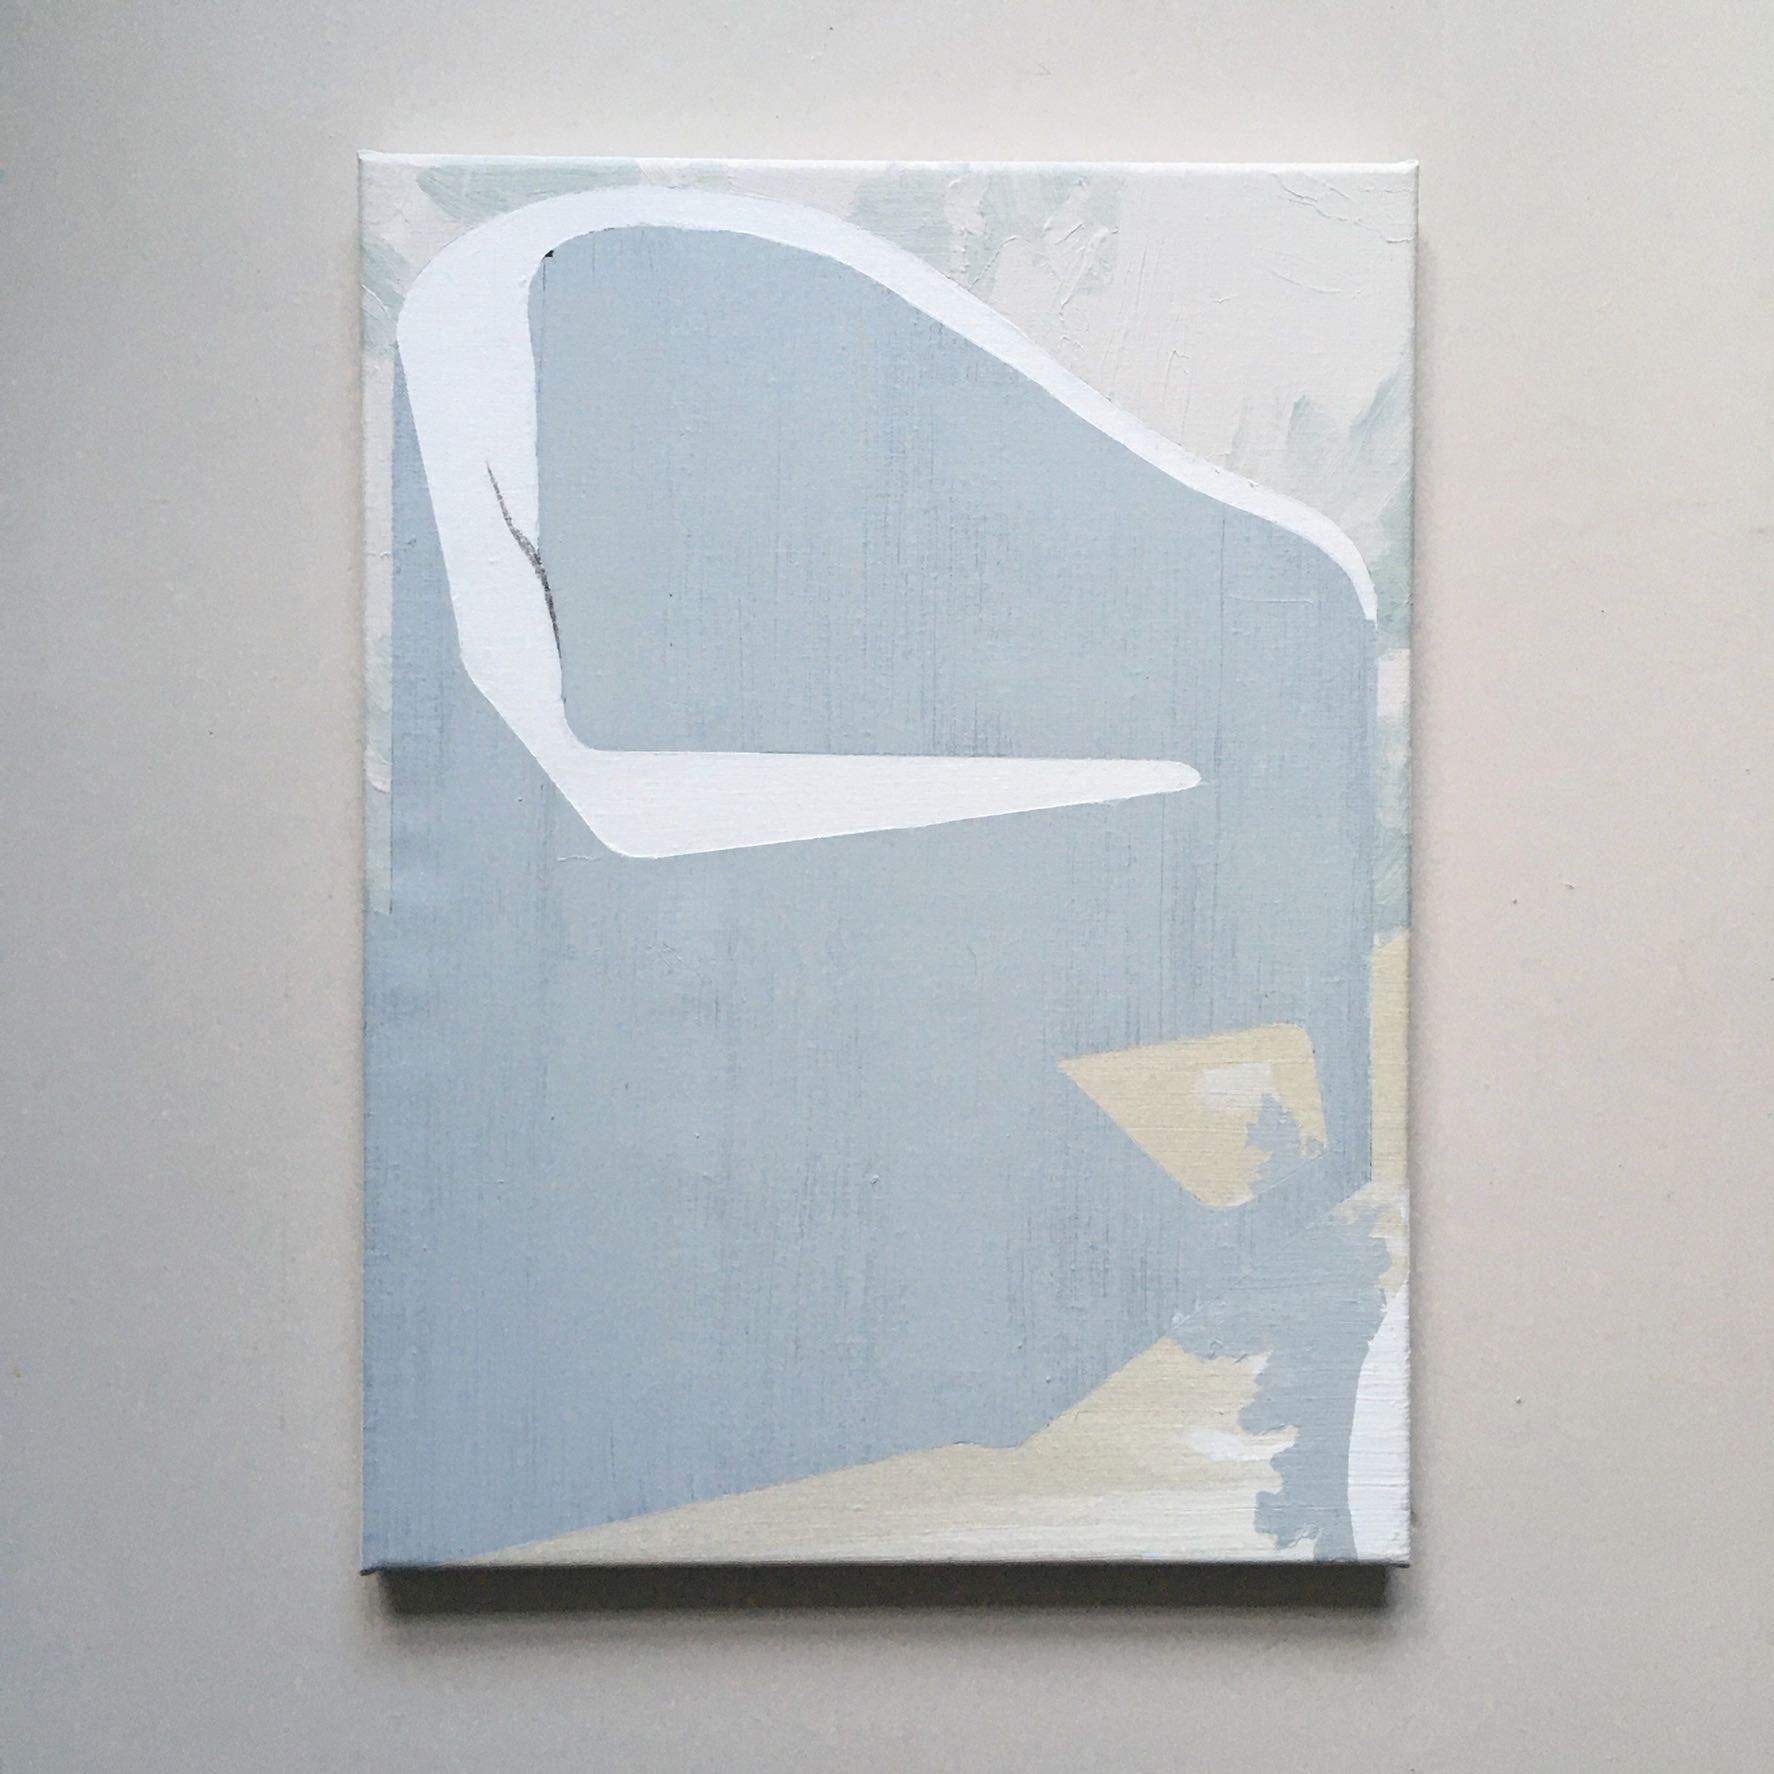 'backyardseat', 36 x 48 cm, acrylics on canvas, 2020